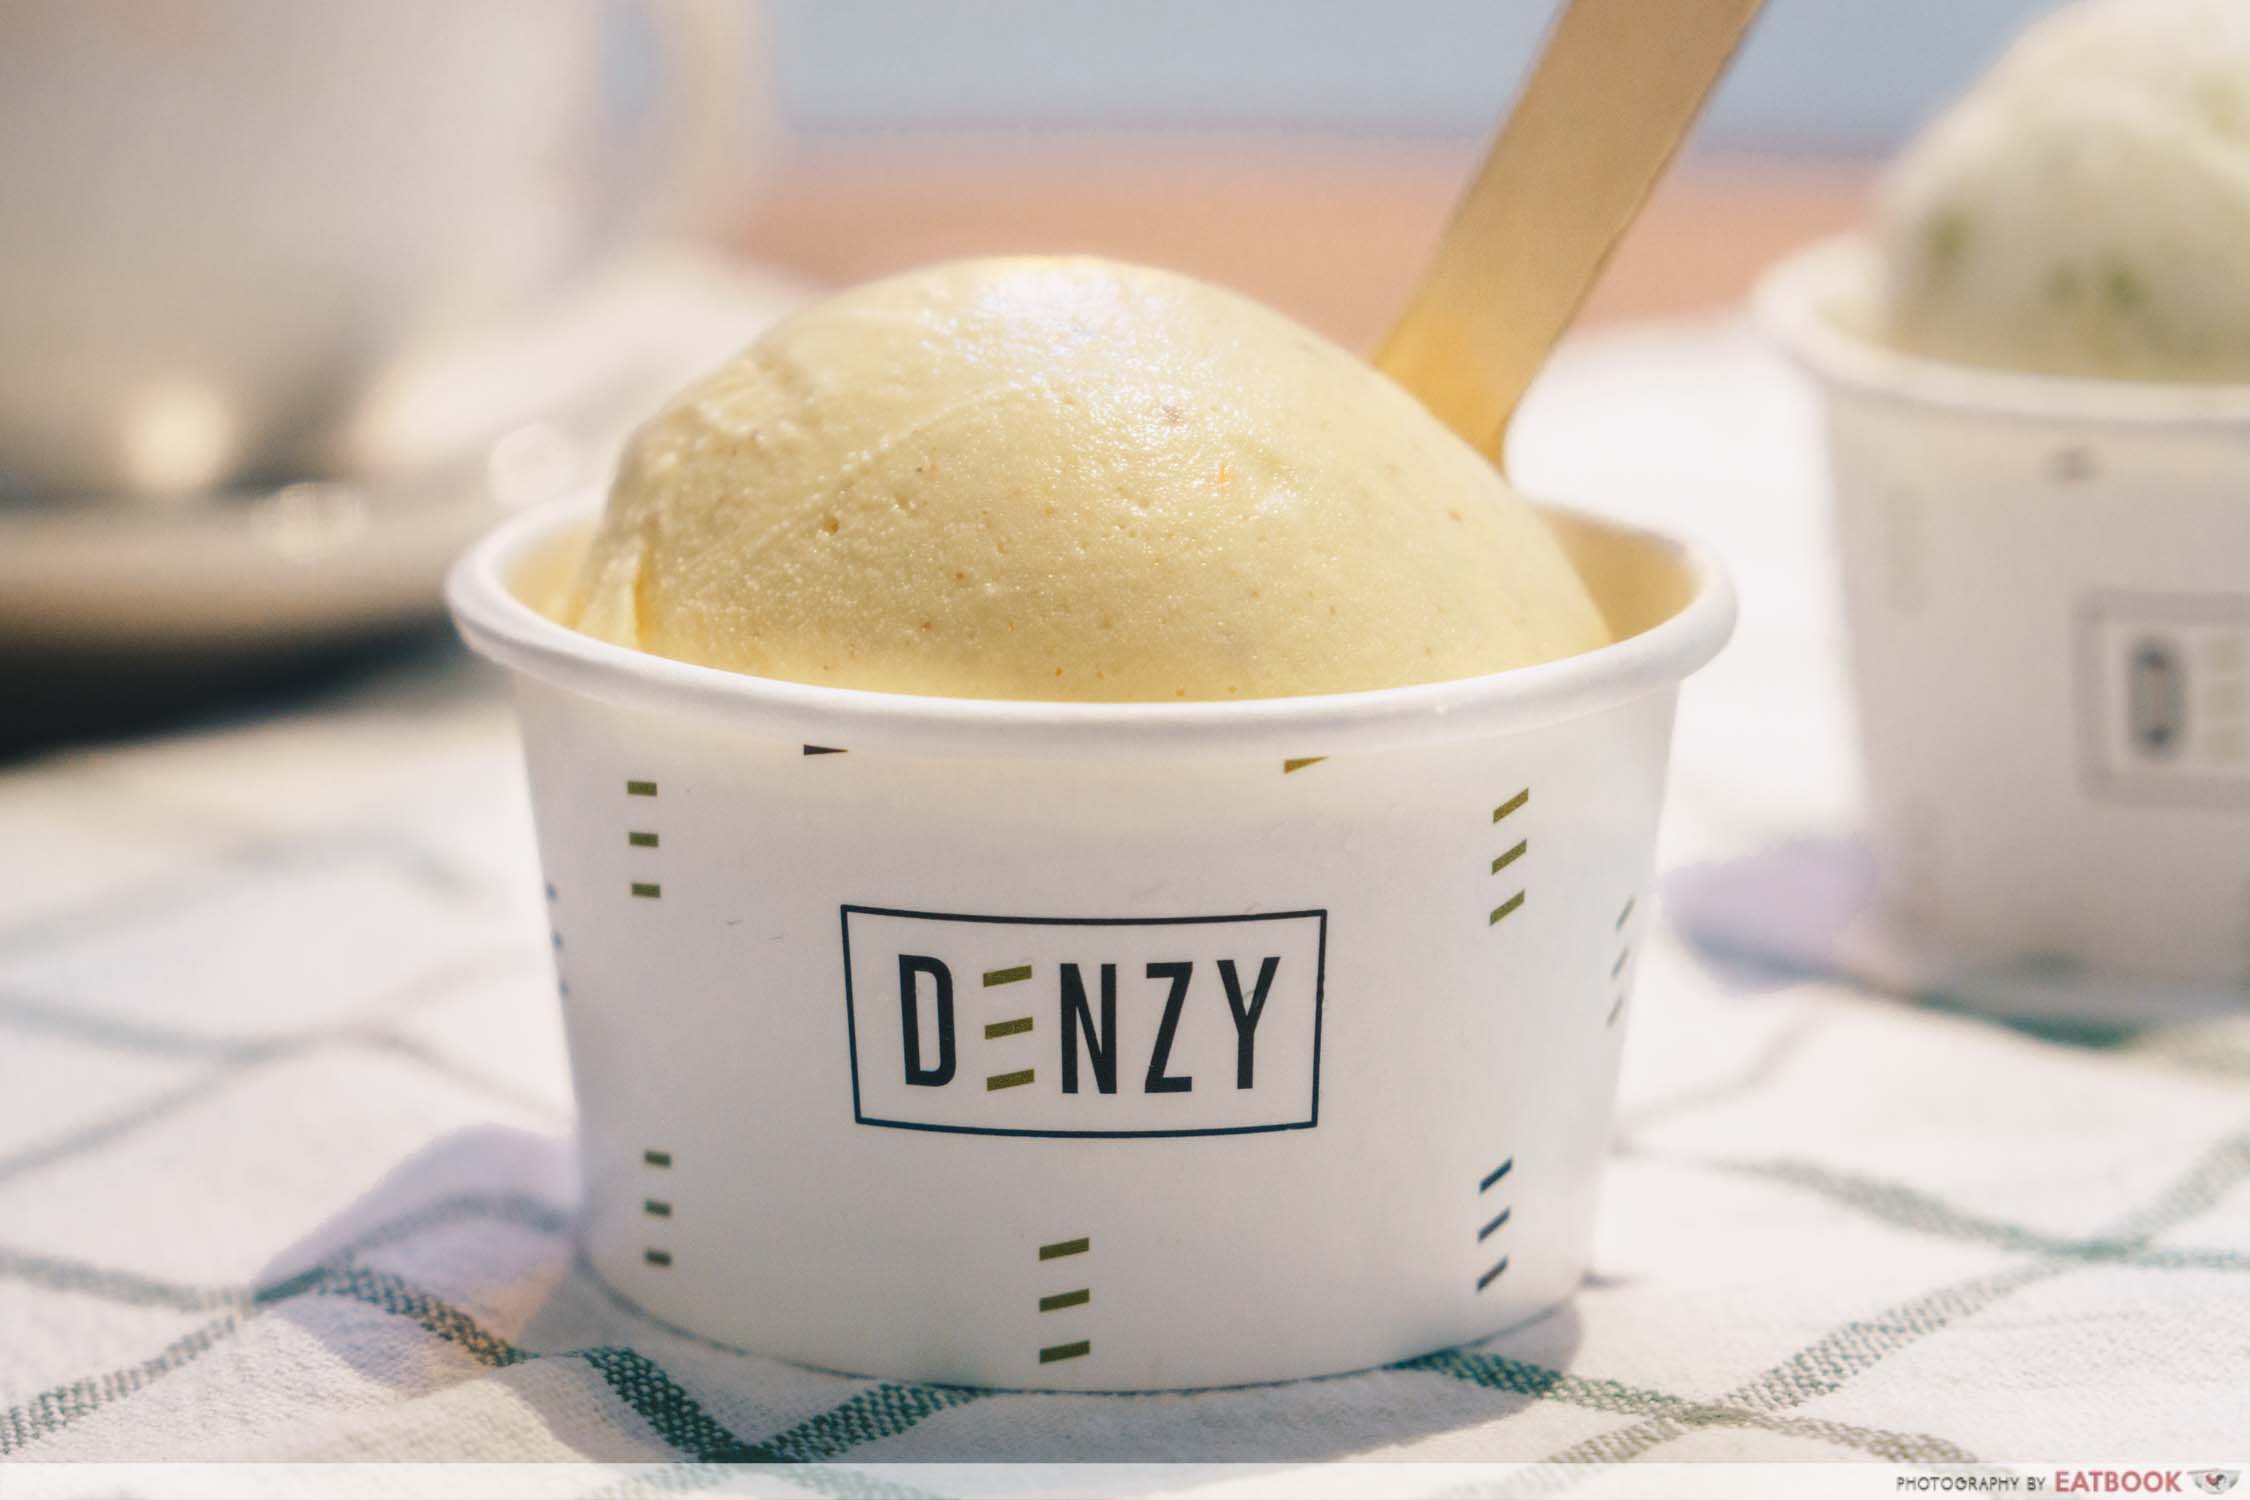 Denzy Gelato - ice cream cup